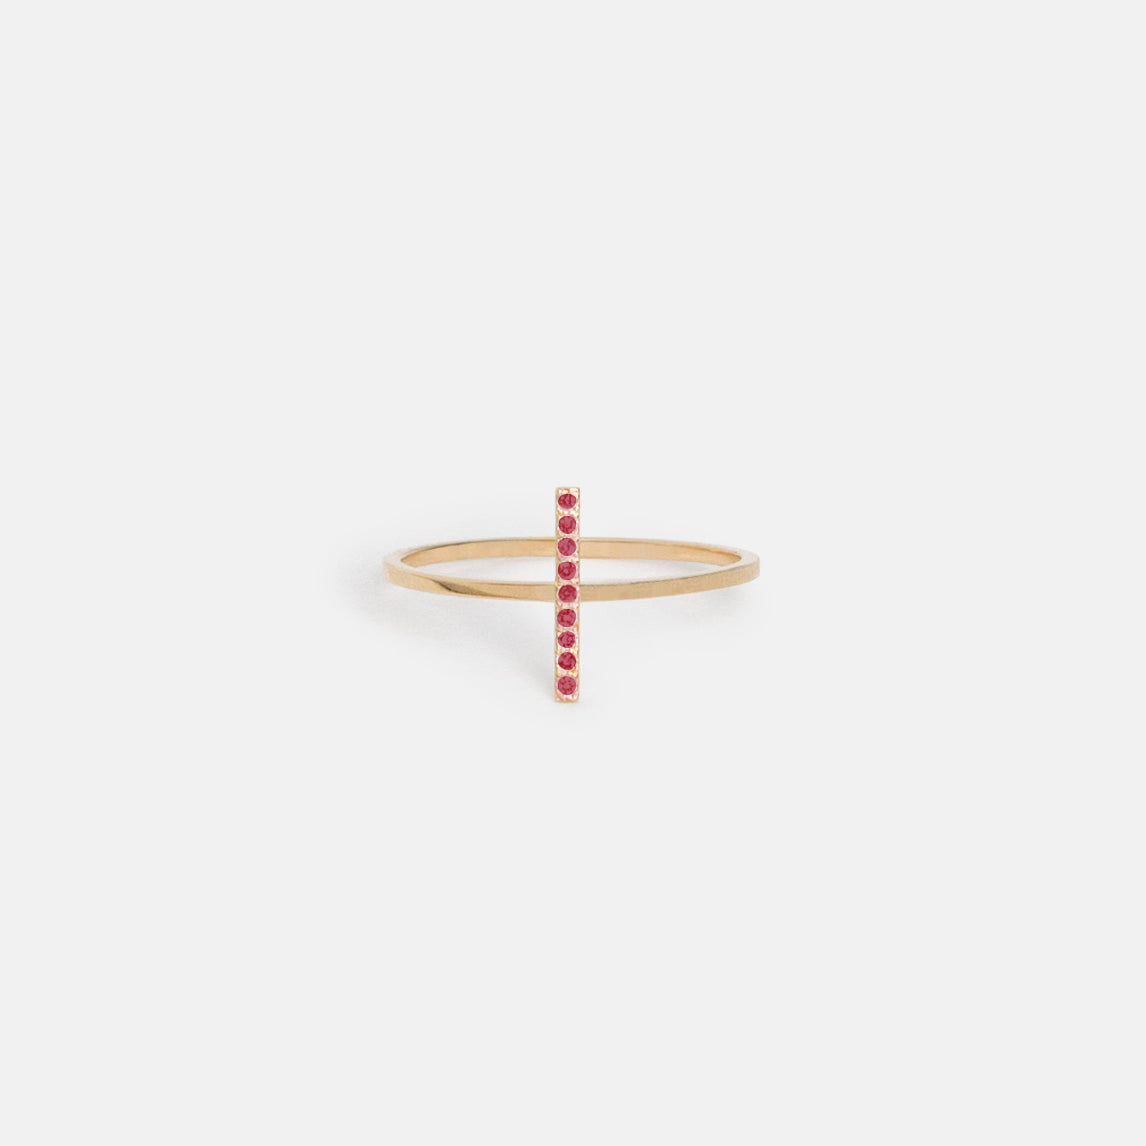 Steva Alternative Ring in 14k Gold set with Rubies by SHW Fine Jewelry